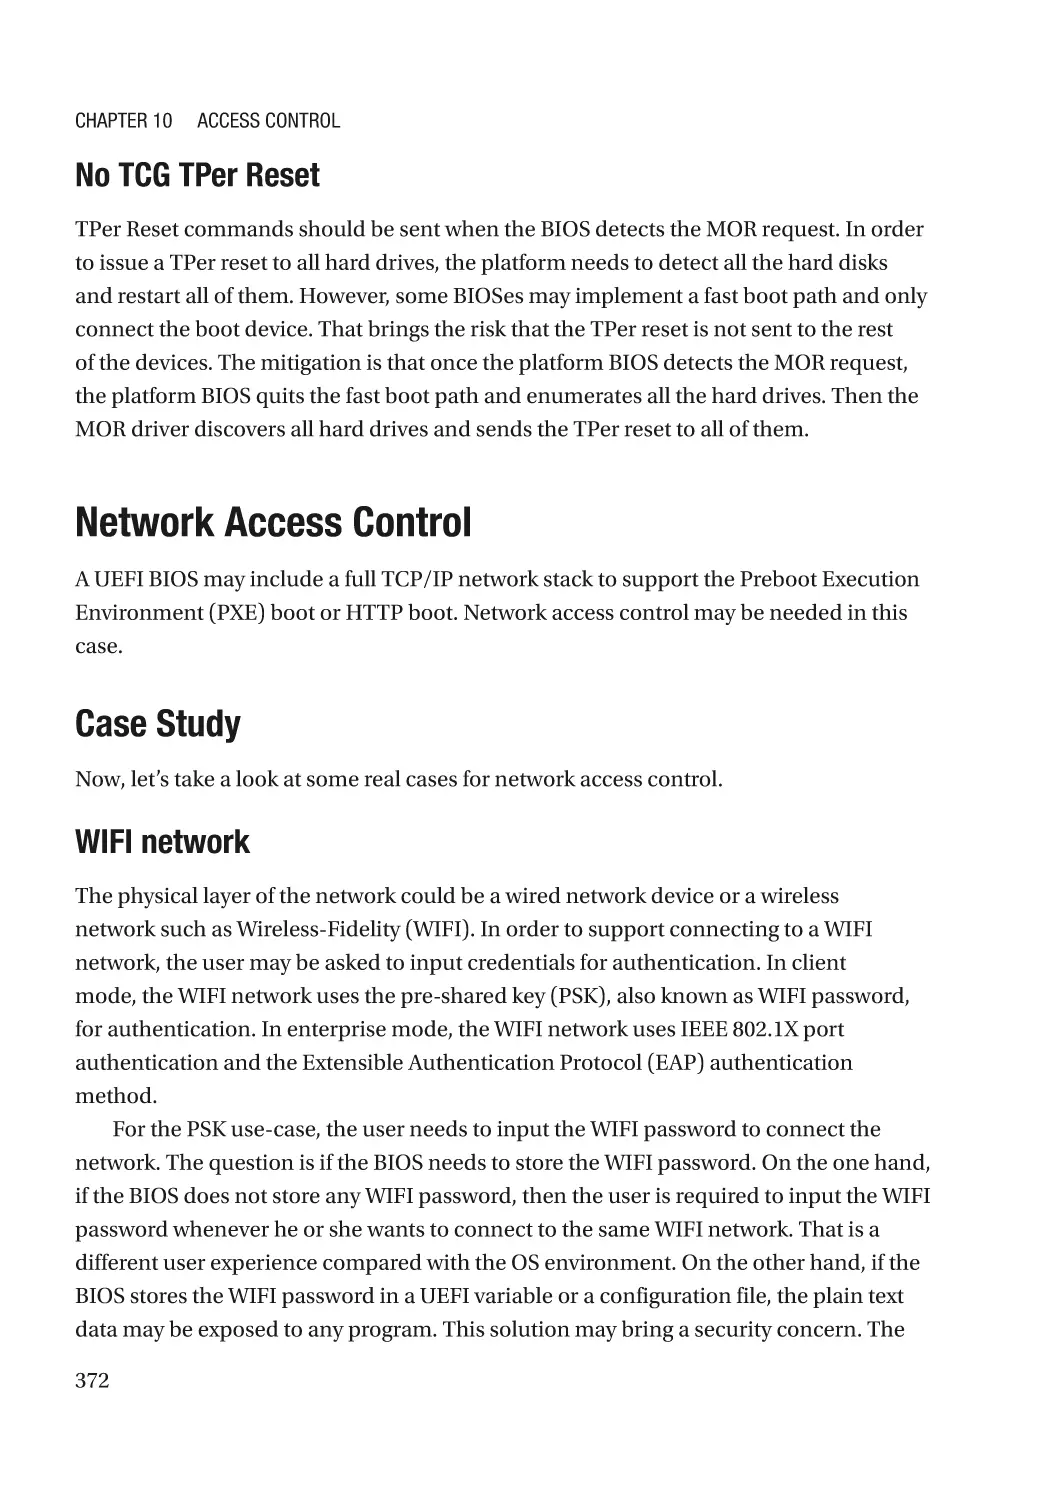 No TCG TPer Reset
Network Access Control
Case Study
WIFI network